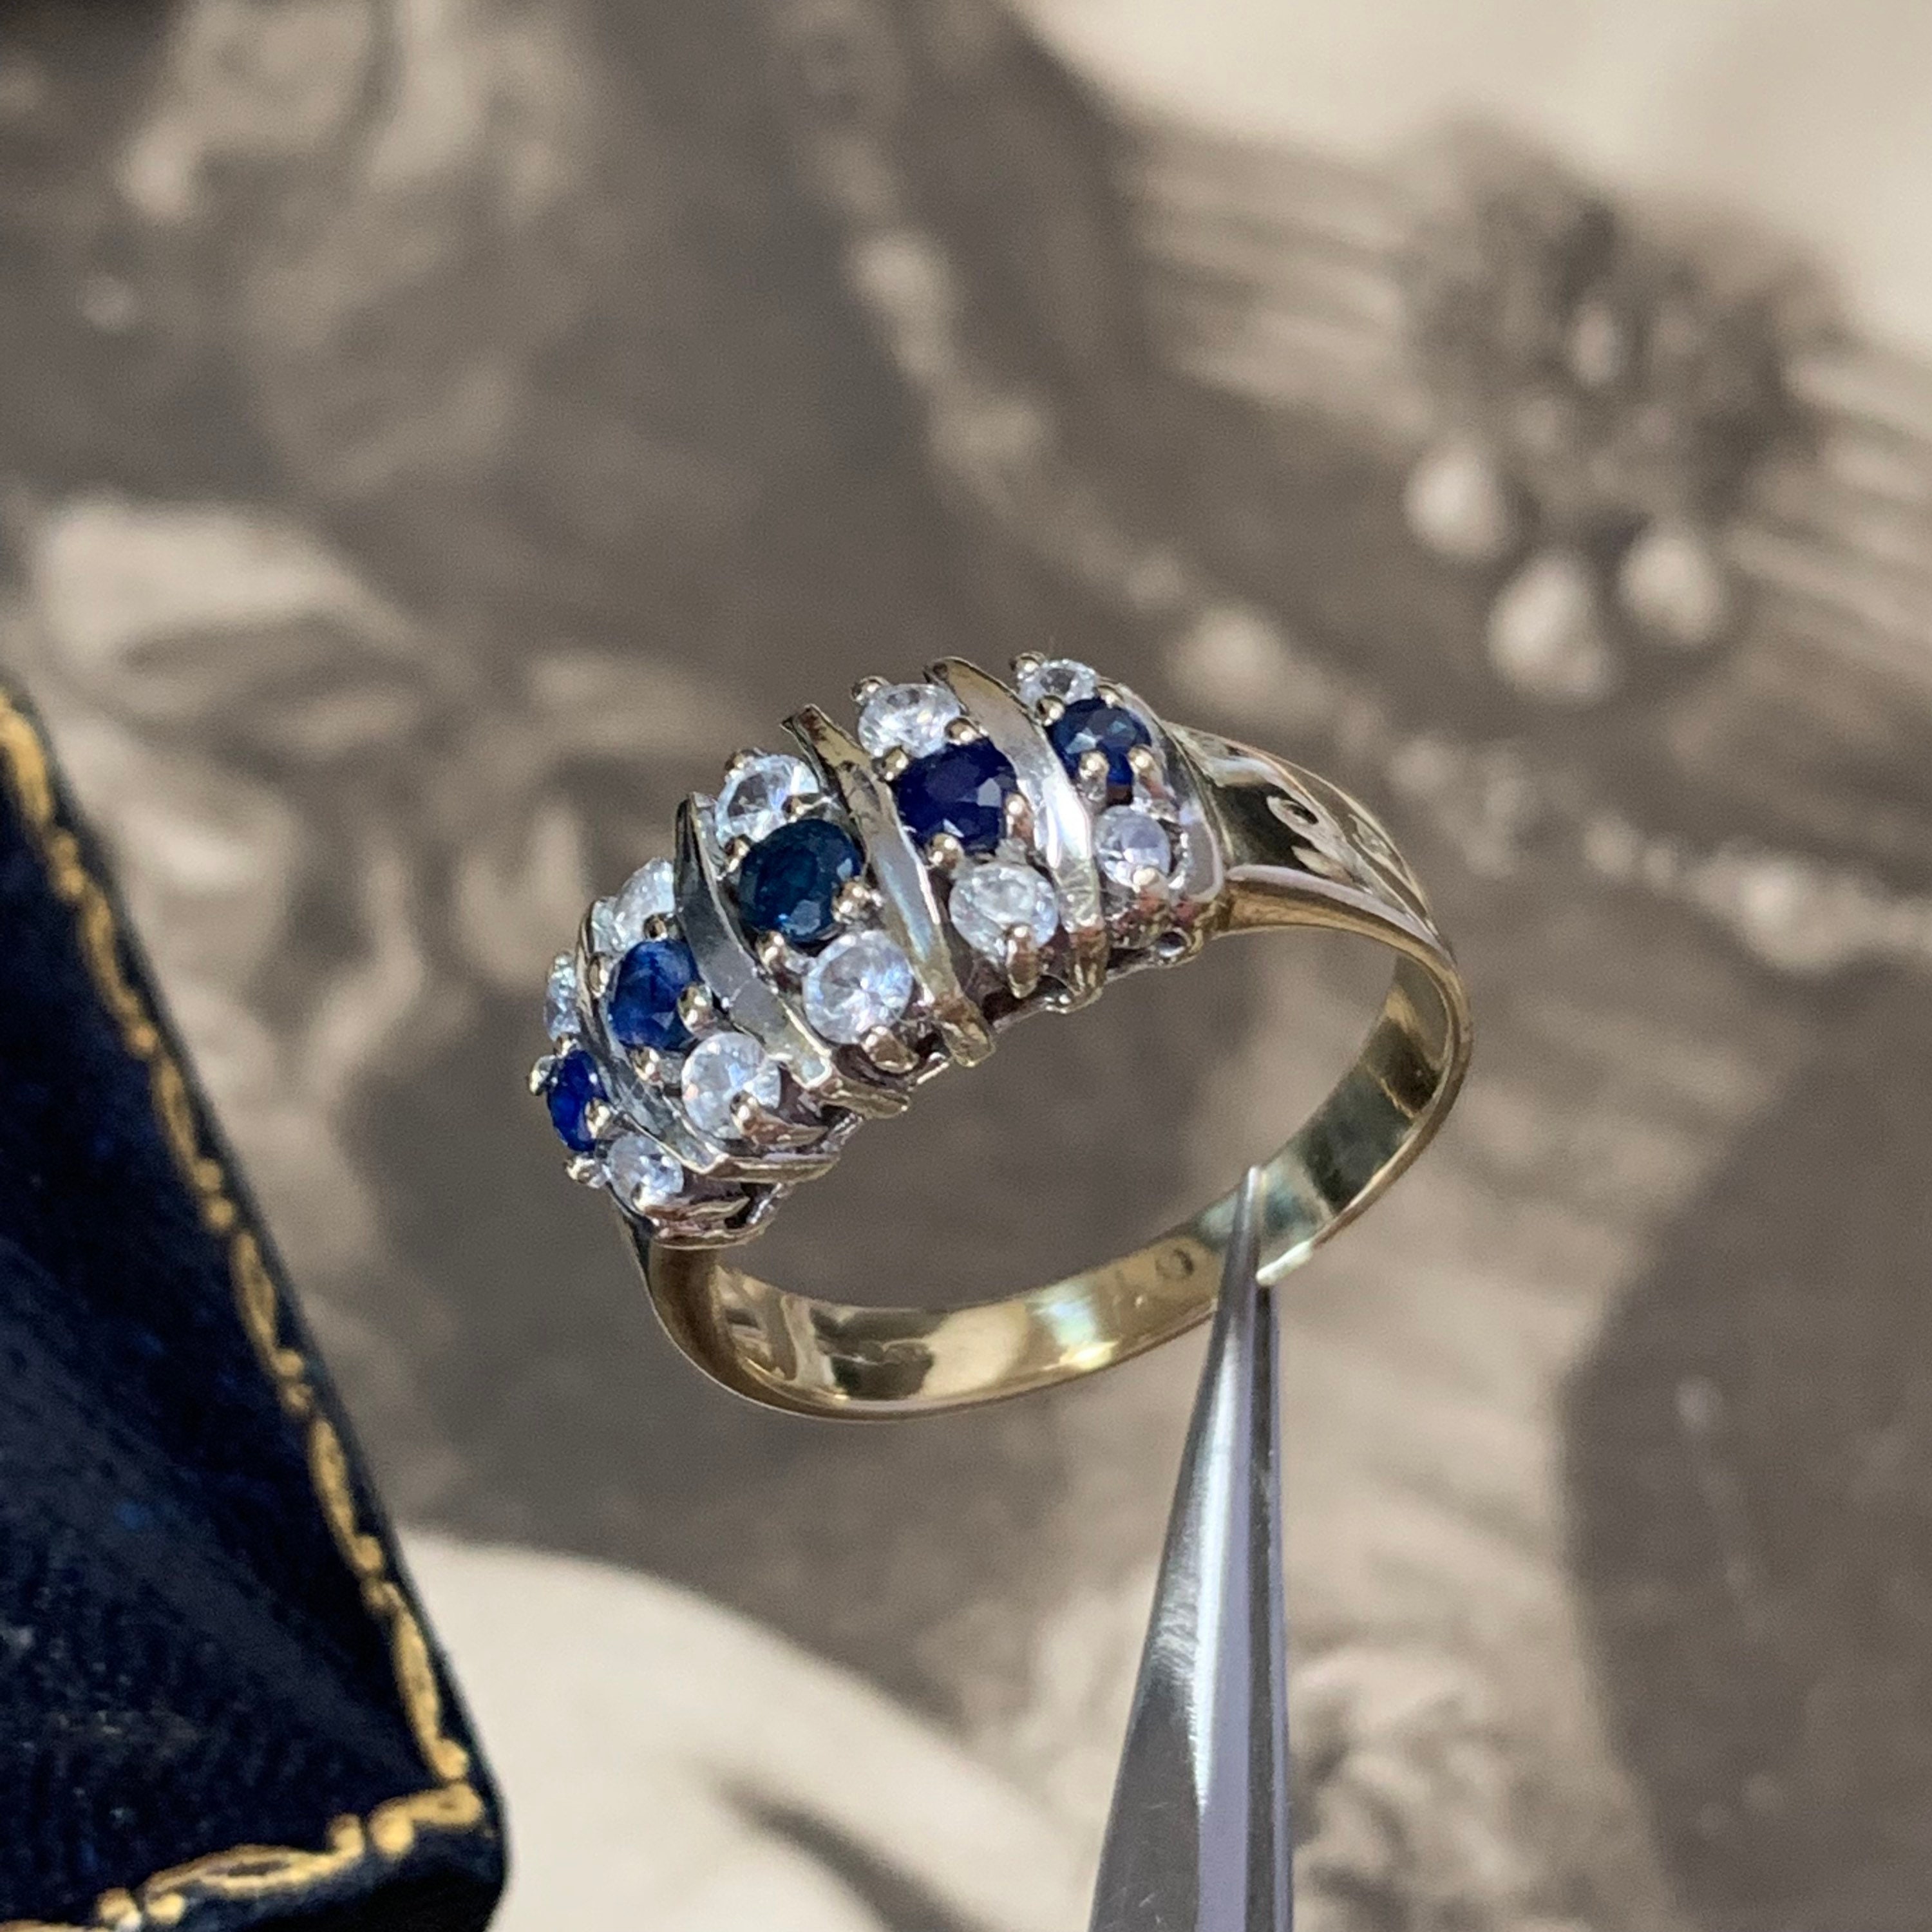 Sapphire & Quartz Gold Ring Size Q. Wondeful Engagement Or Wedding Band